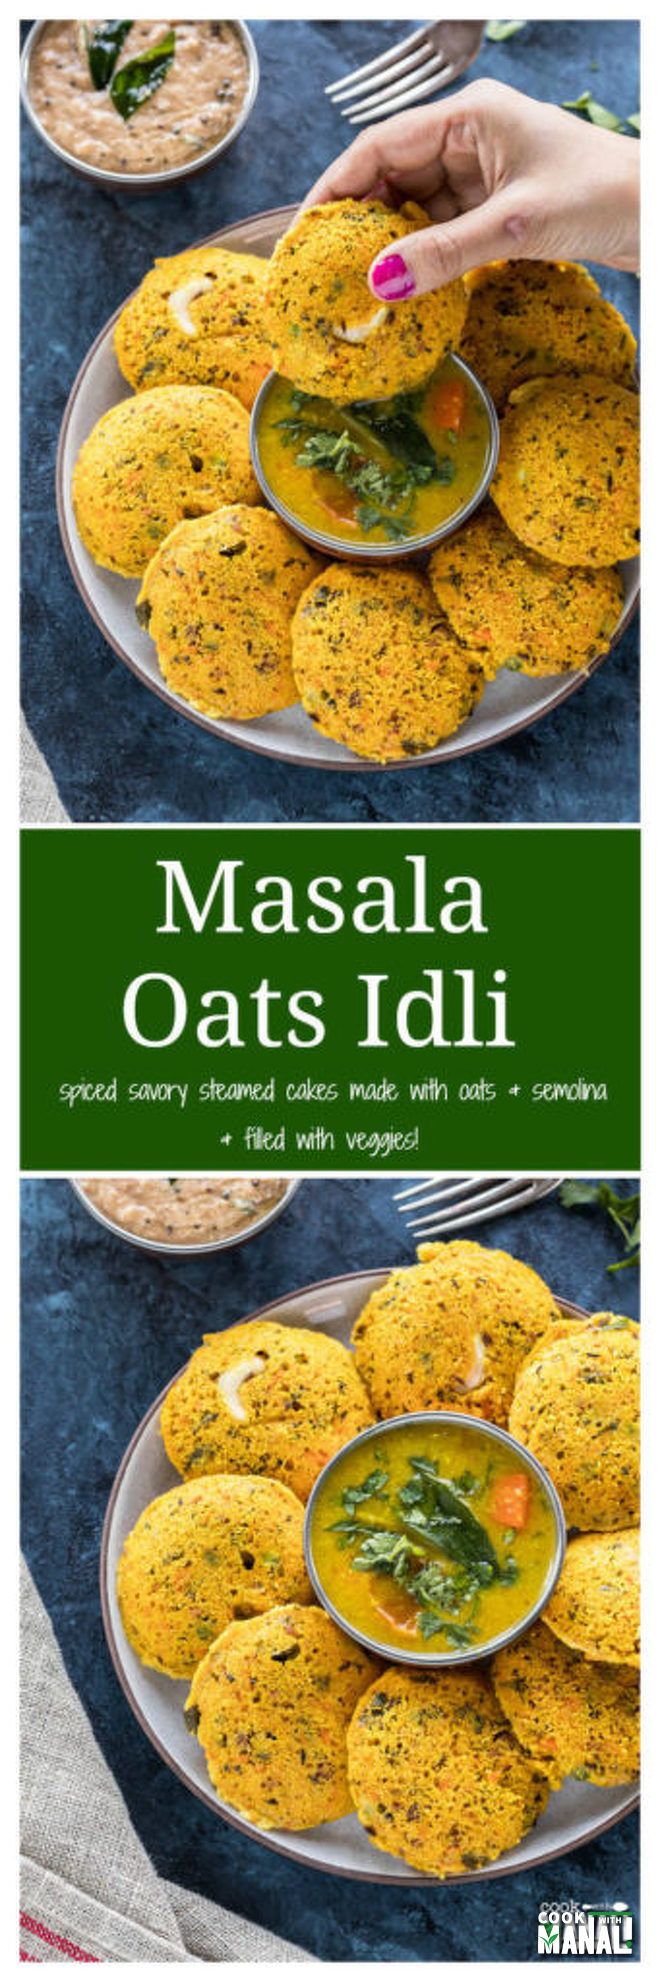 Masala Oats Idli - Cook With Manali